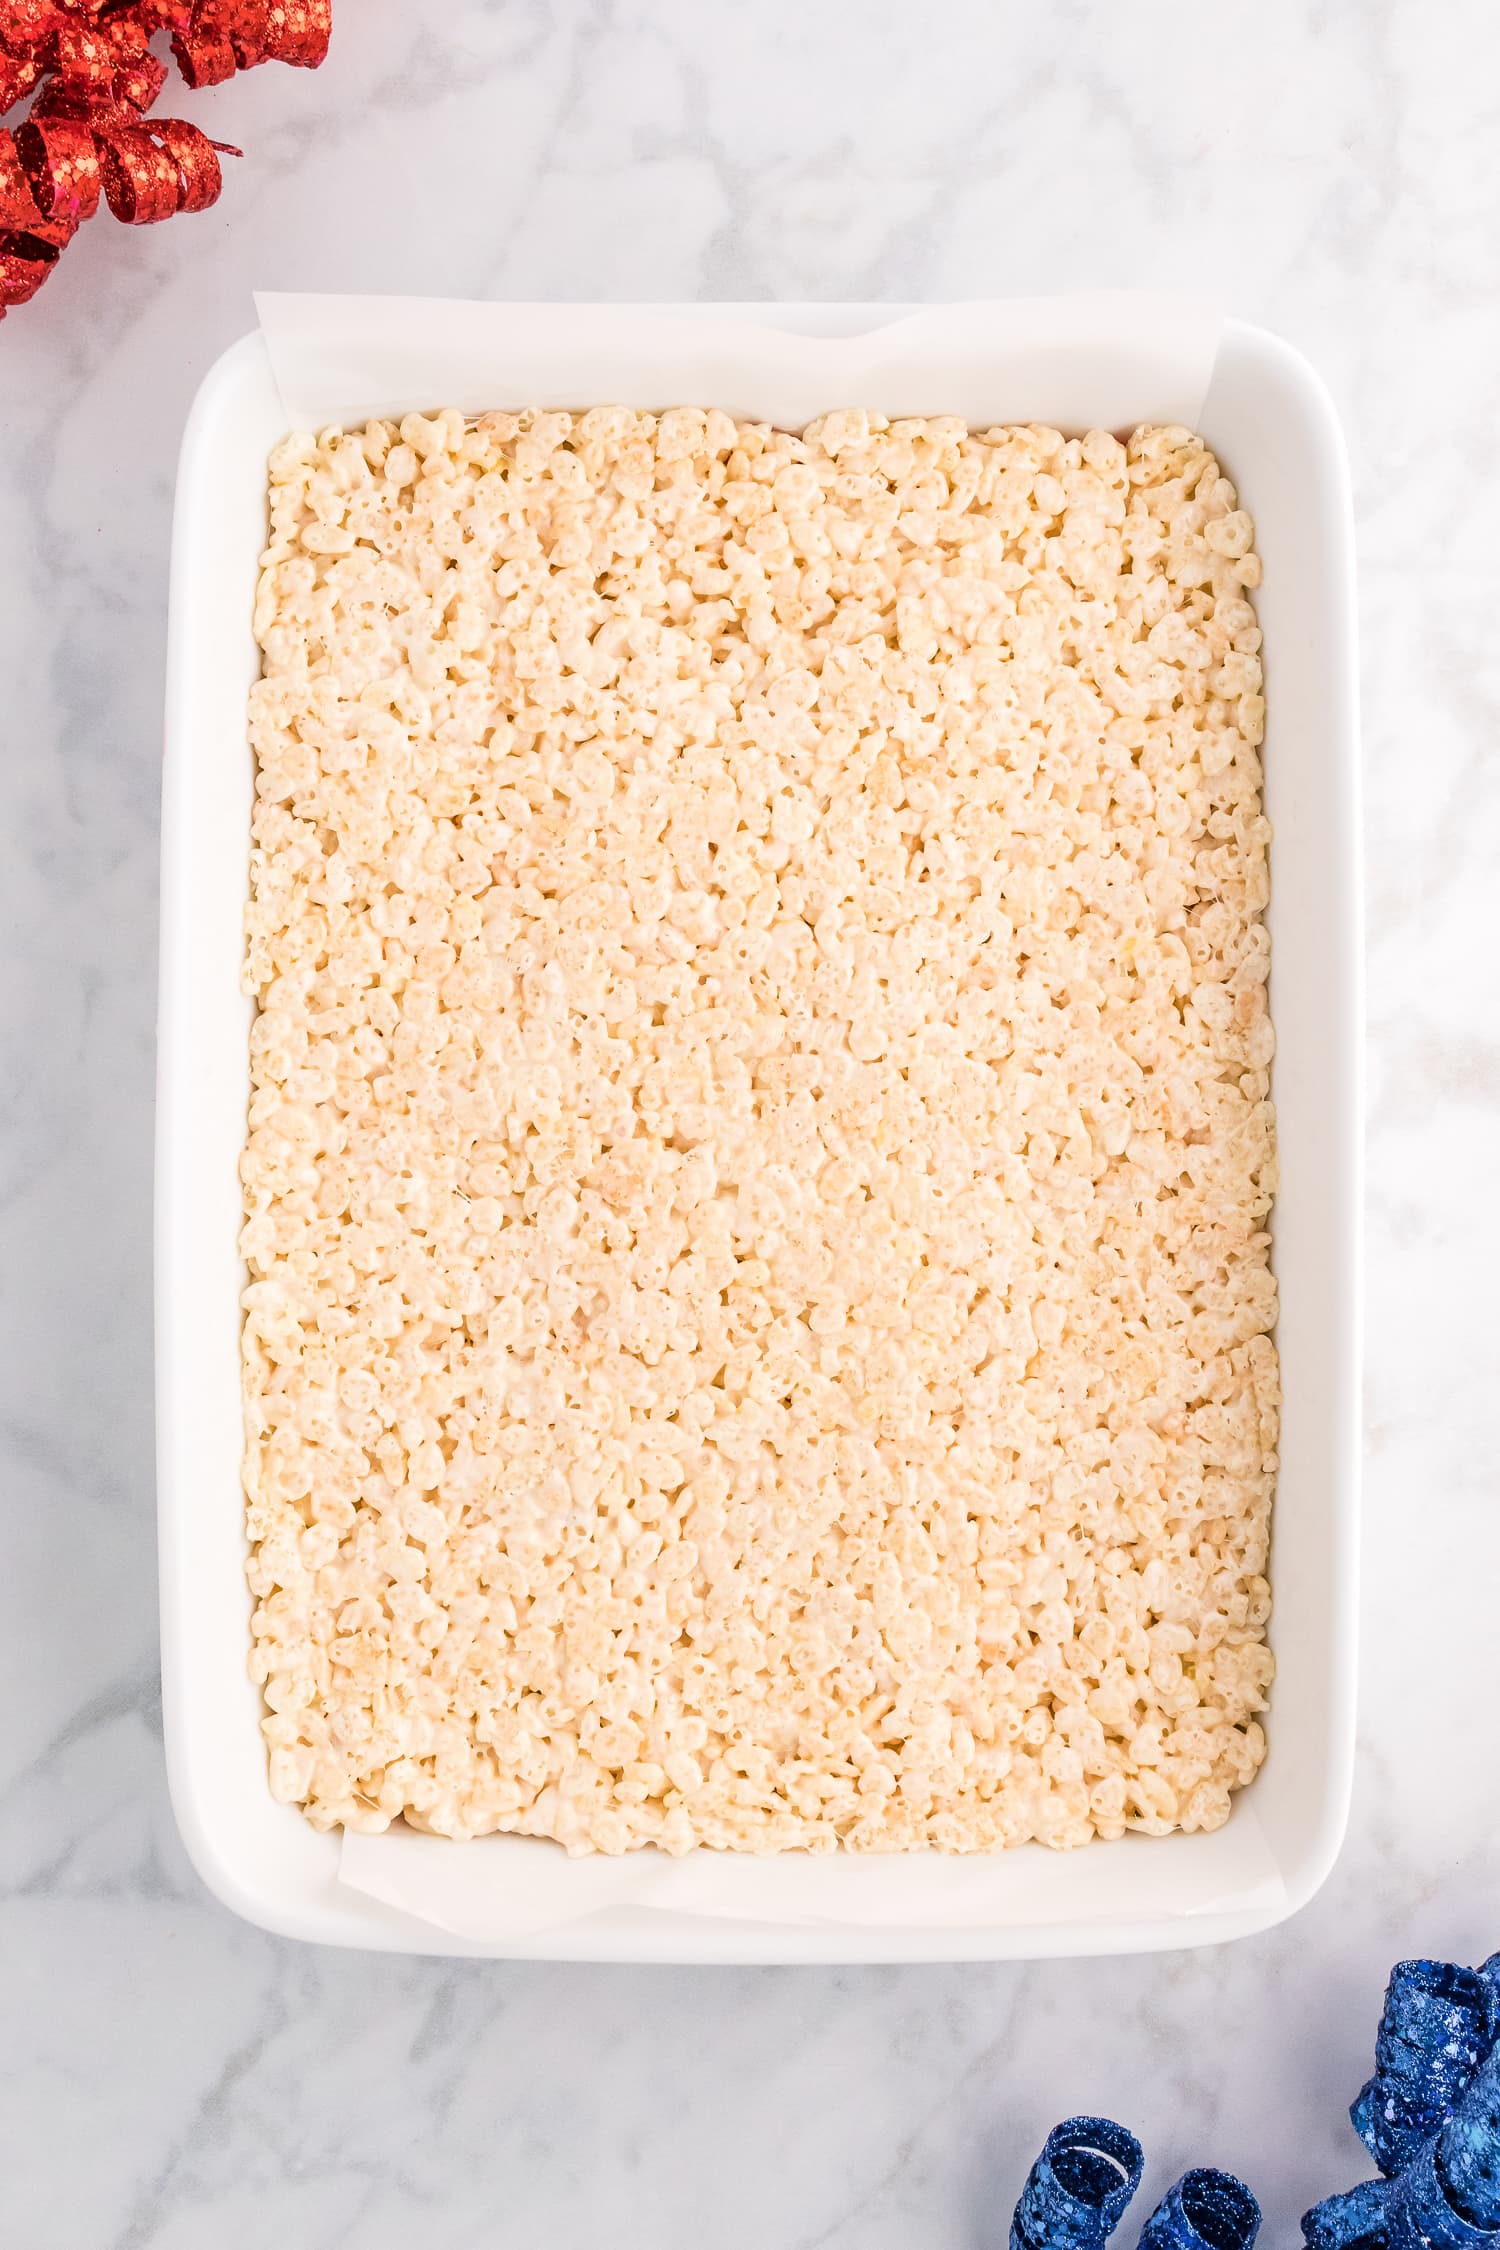 Layer of rice krispies in pan